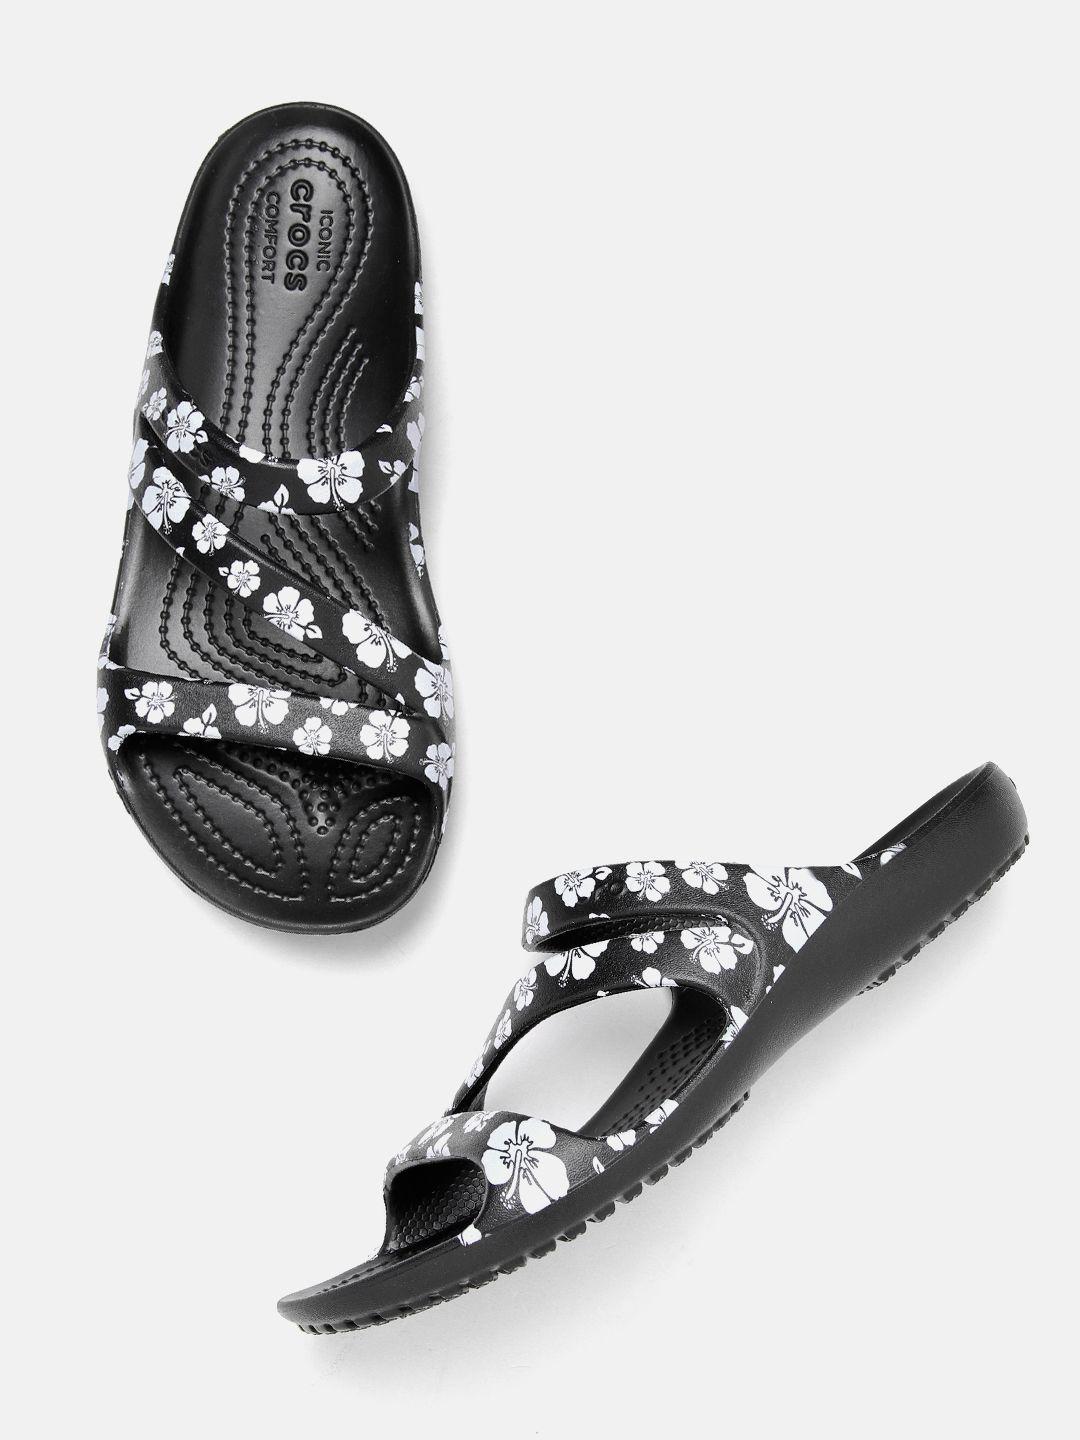 crocs-women-black-&-white-floral-printed-open-toe-flats